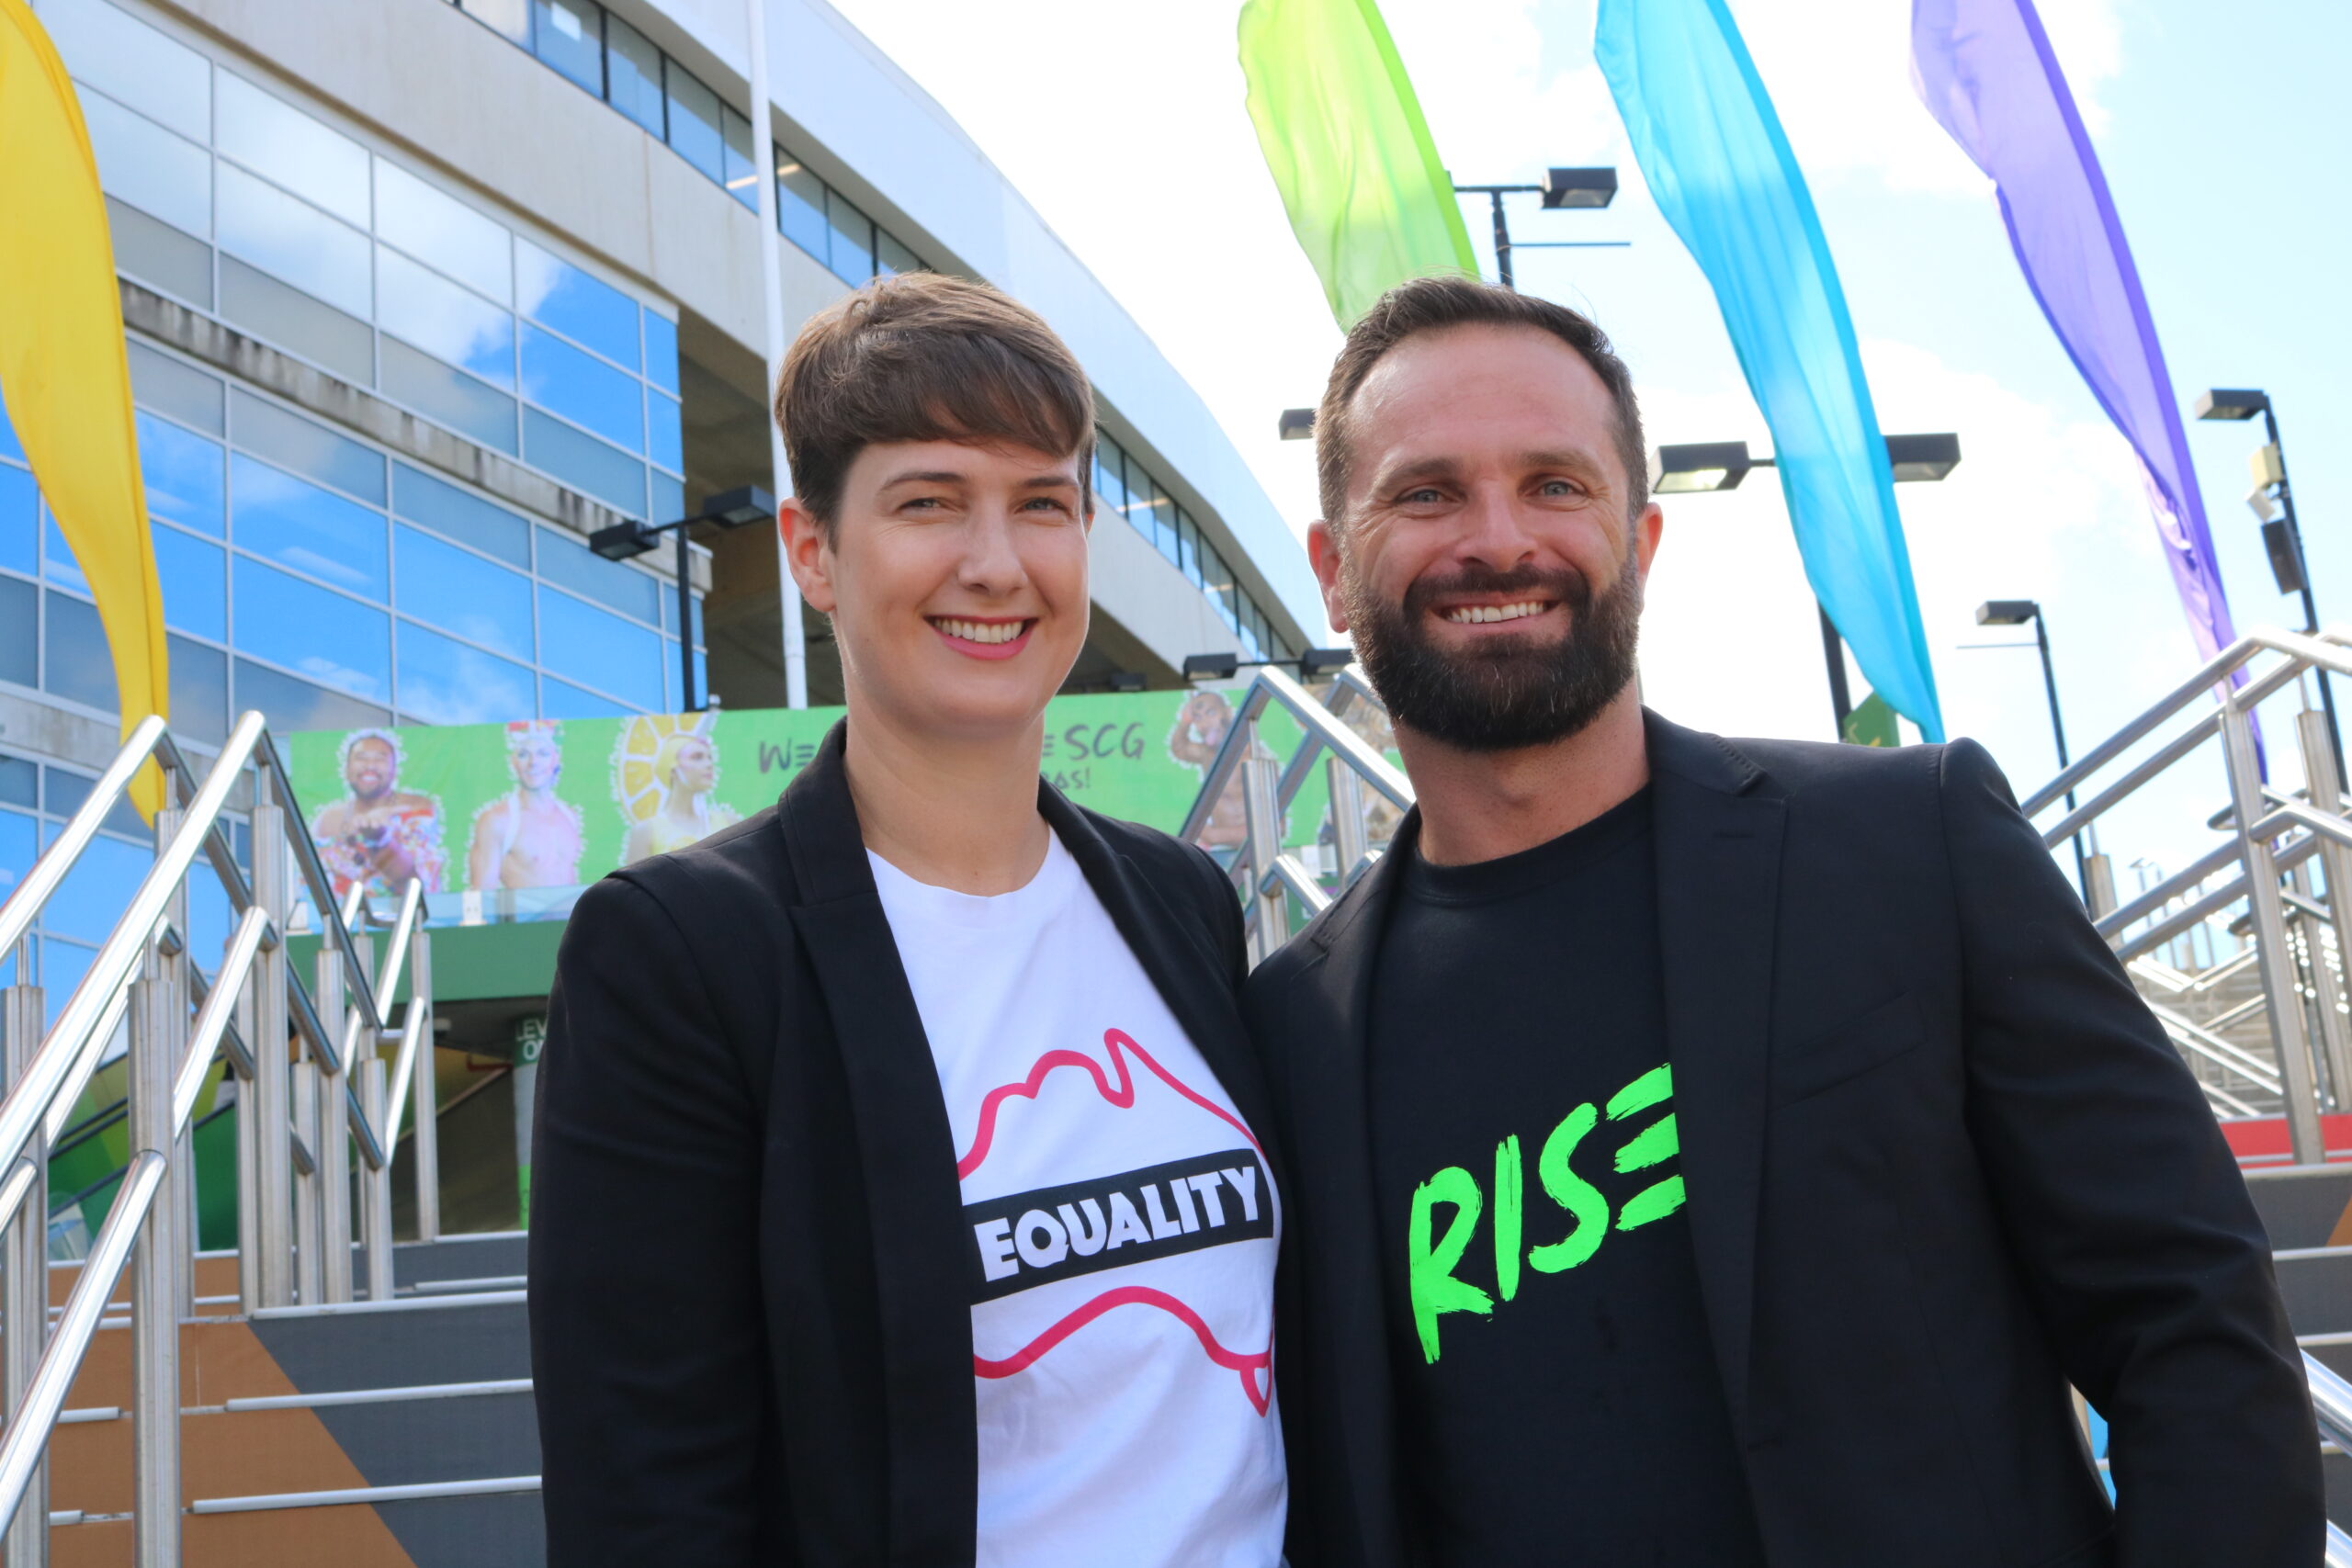 Mardi Gras & Equality Australia New Partnership